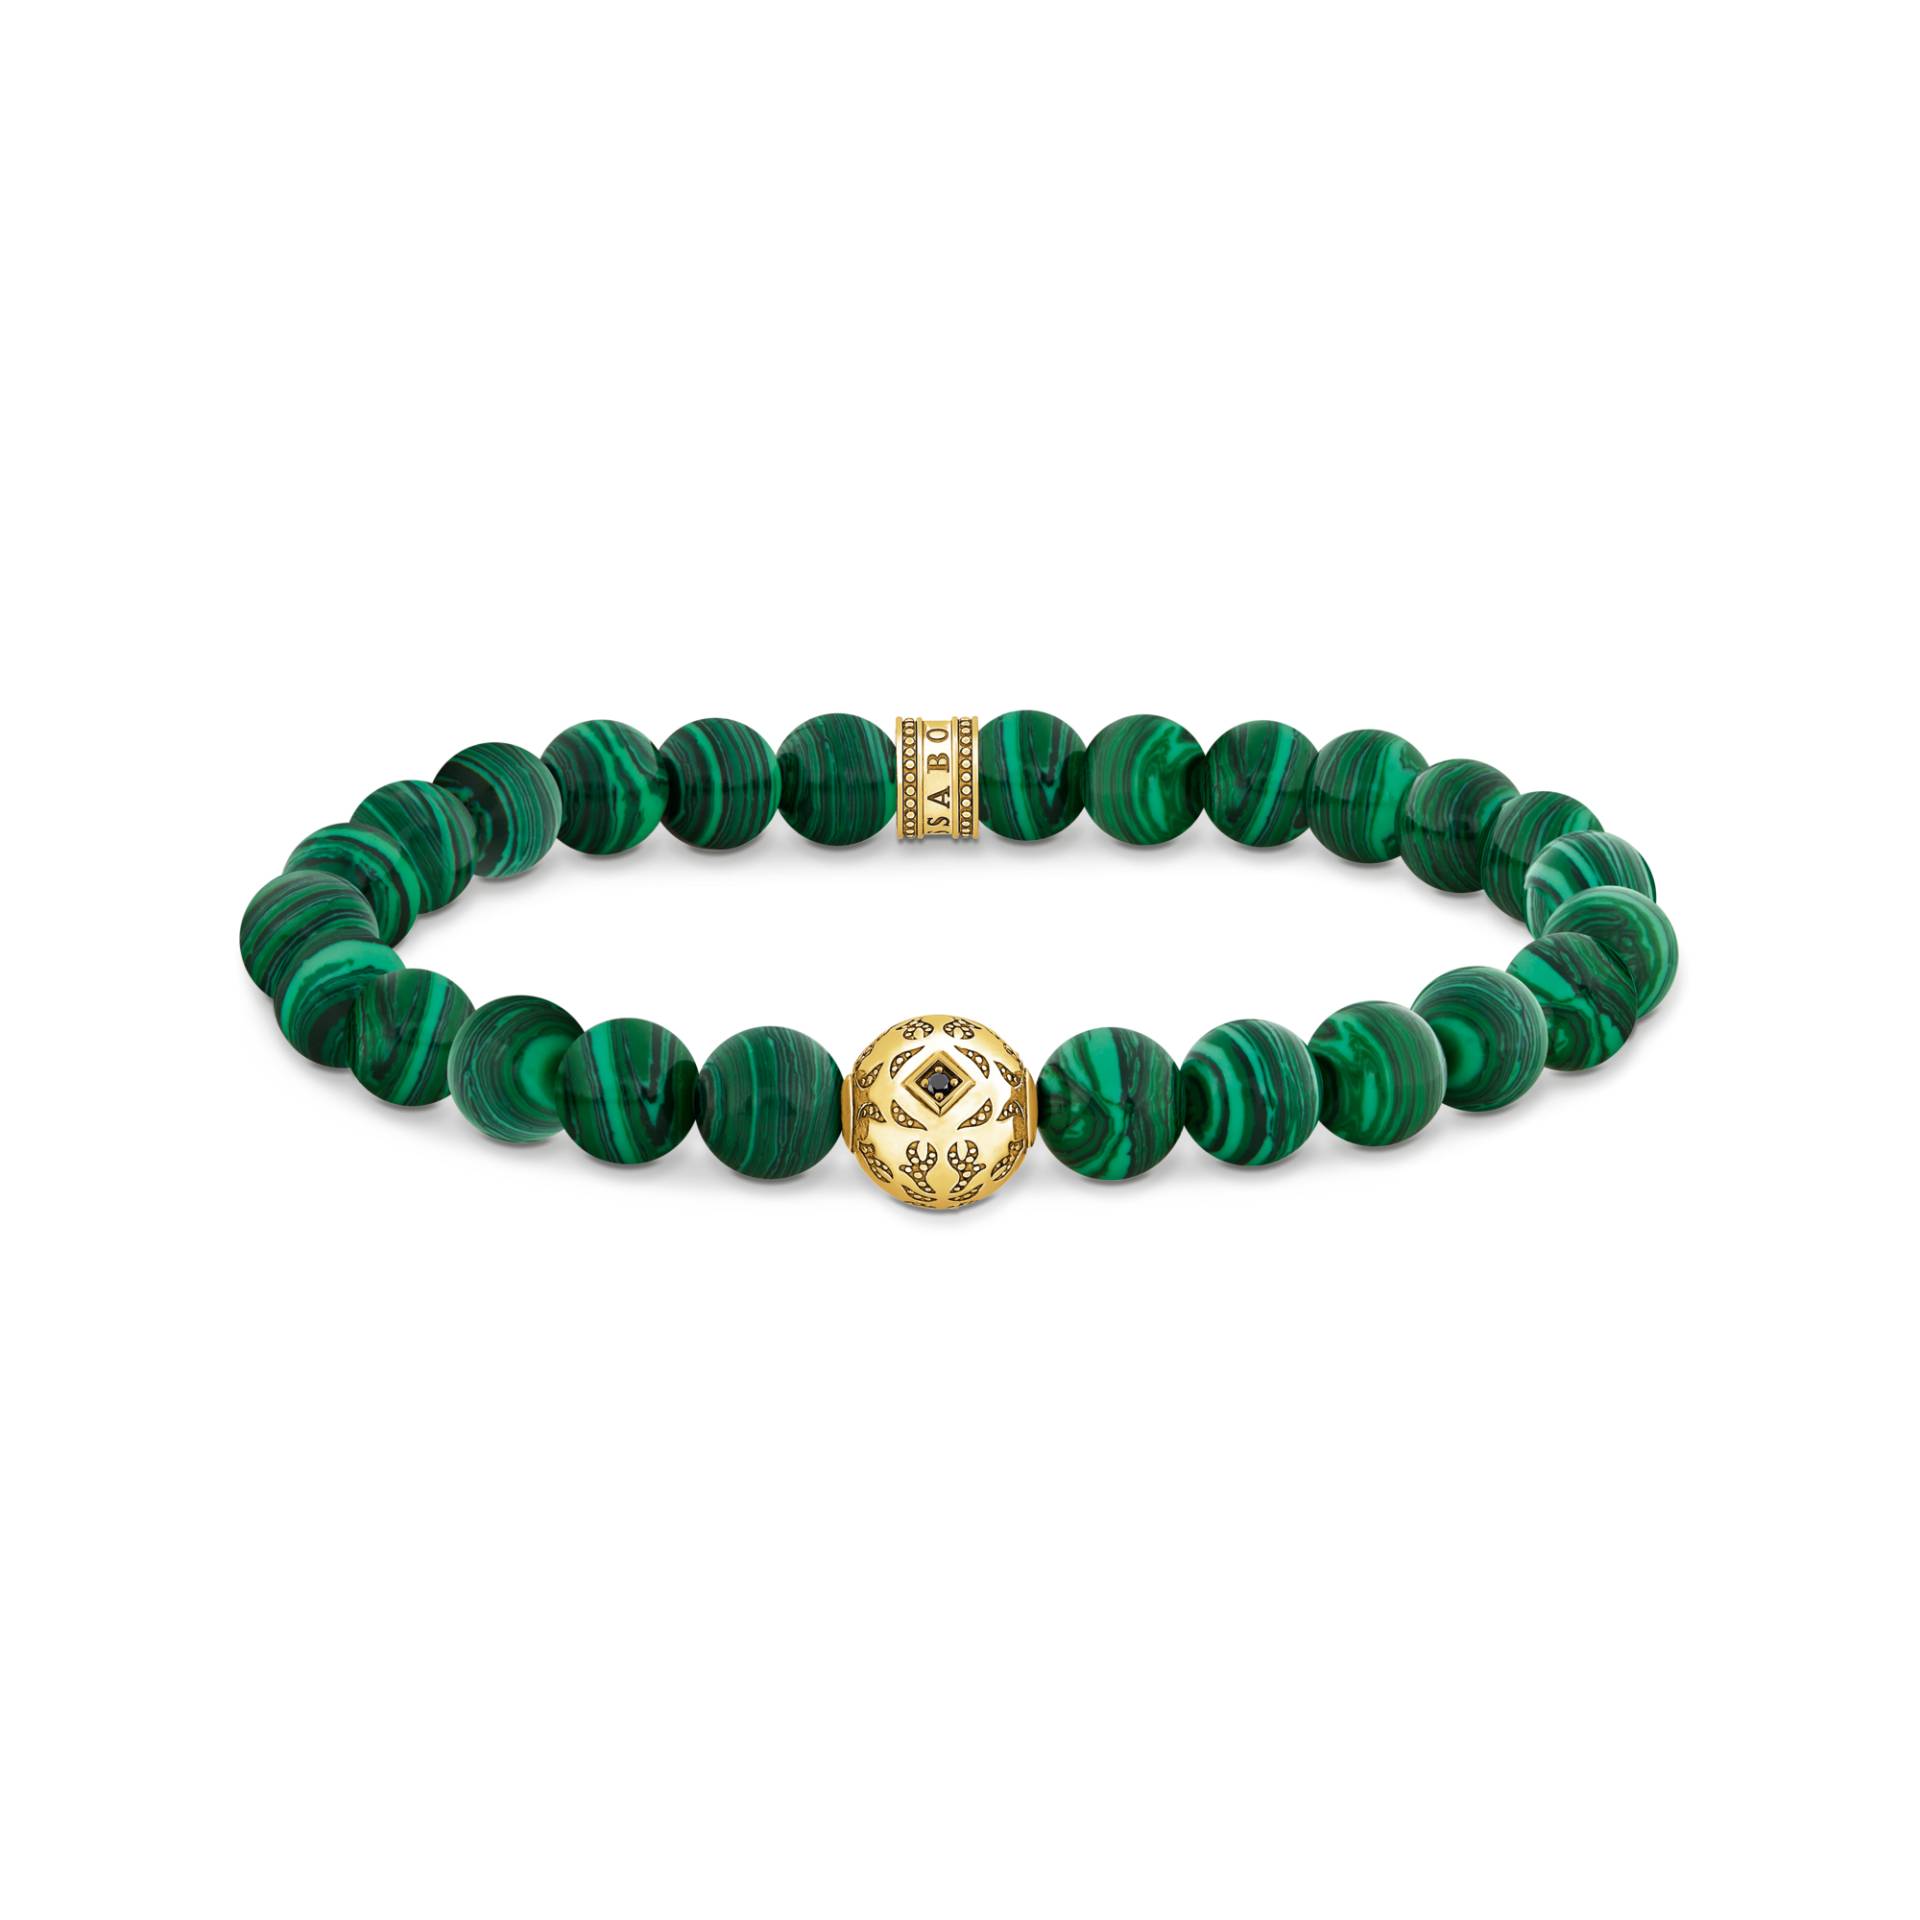 Thomas Sabo Beads-Armband aus grünen Steinen vergoldet grün A2145-140-6-L17 von Thomas Sabo